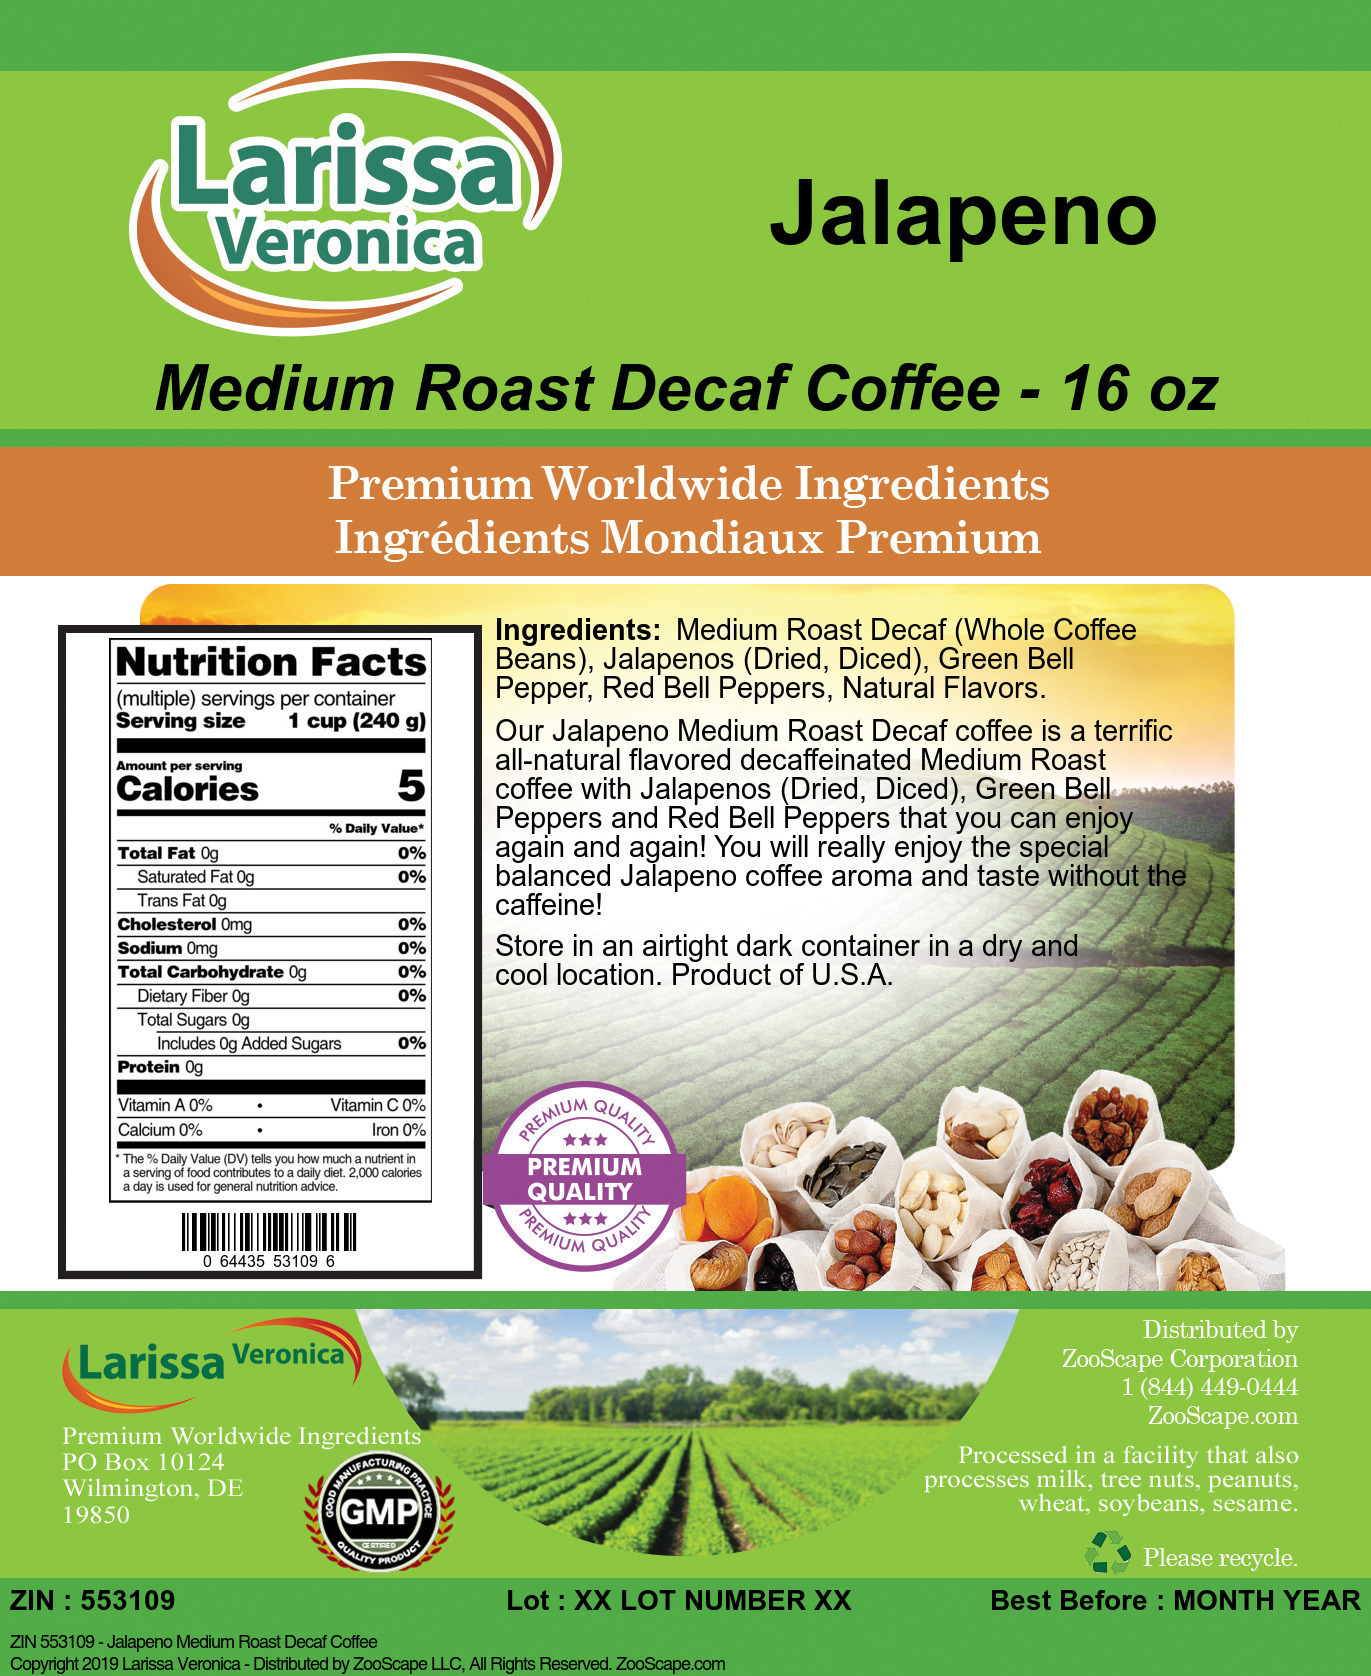 Jalapeno Medium Roast Decaf Coffee - Label